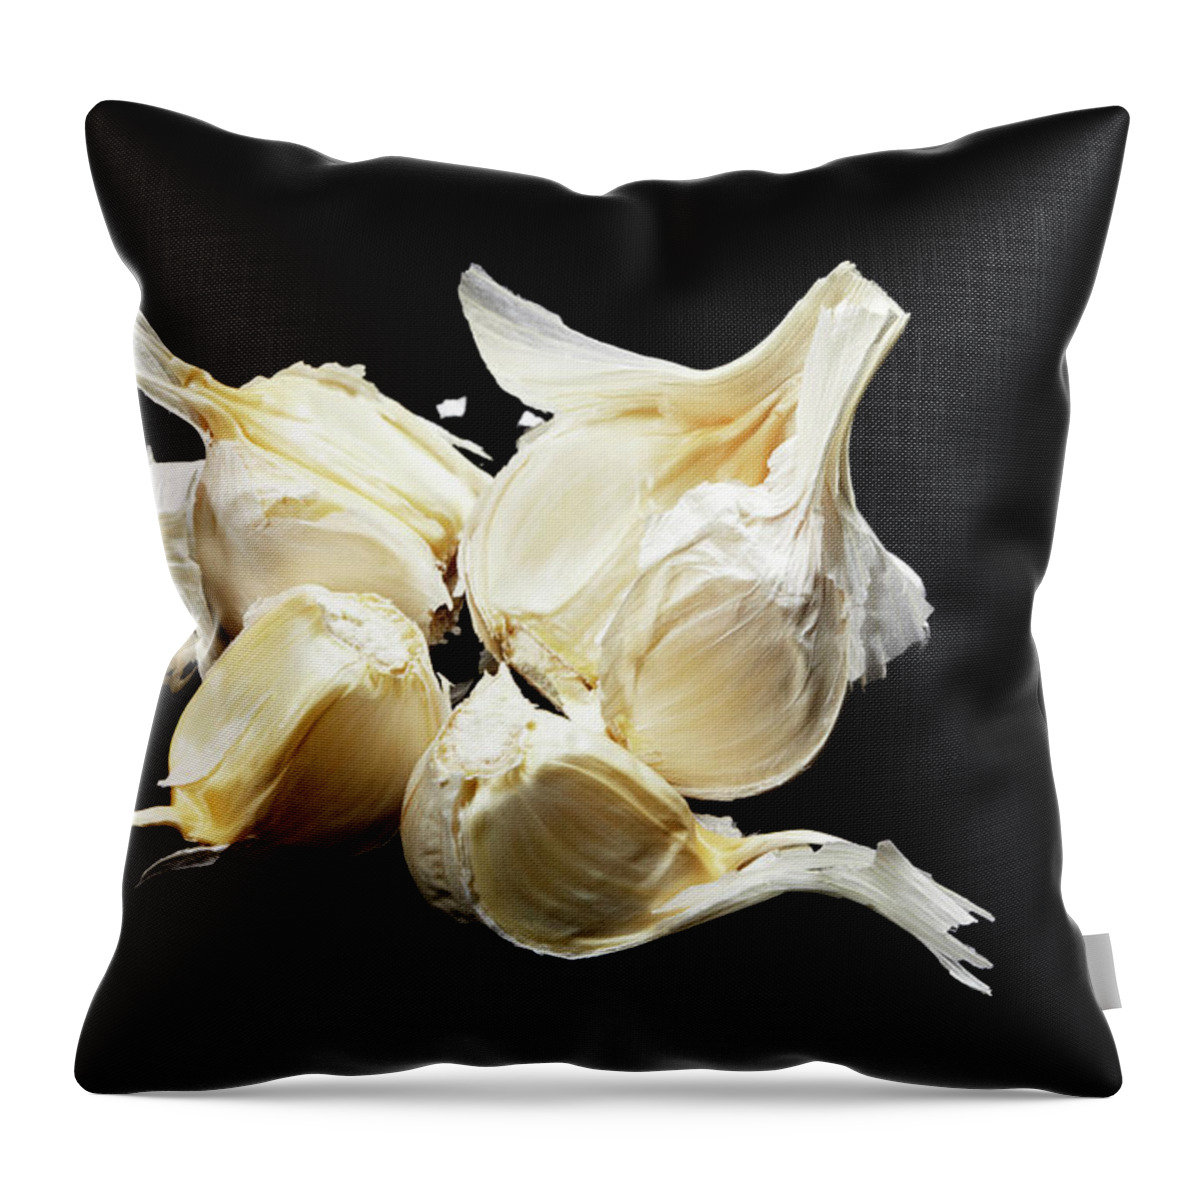 Black Background Throw Pillow featuring the photograph Garlic by Yuji Kotani